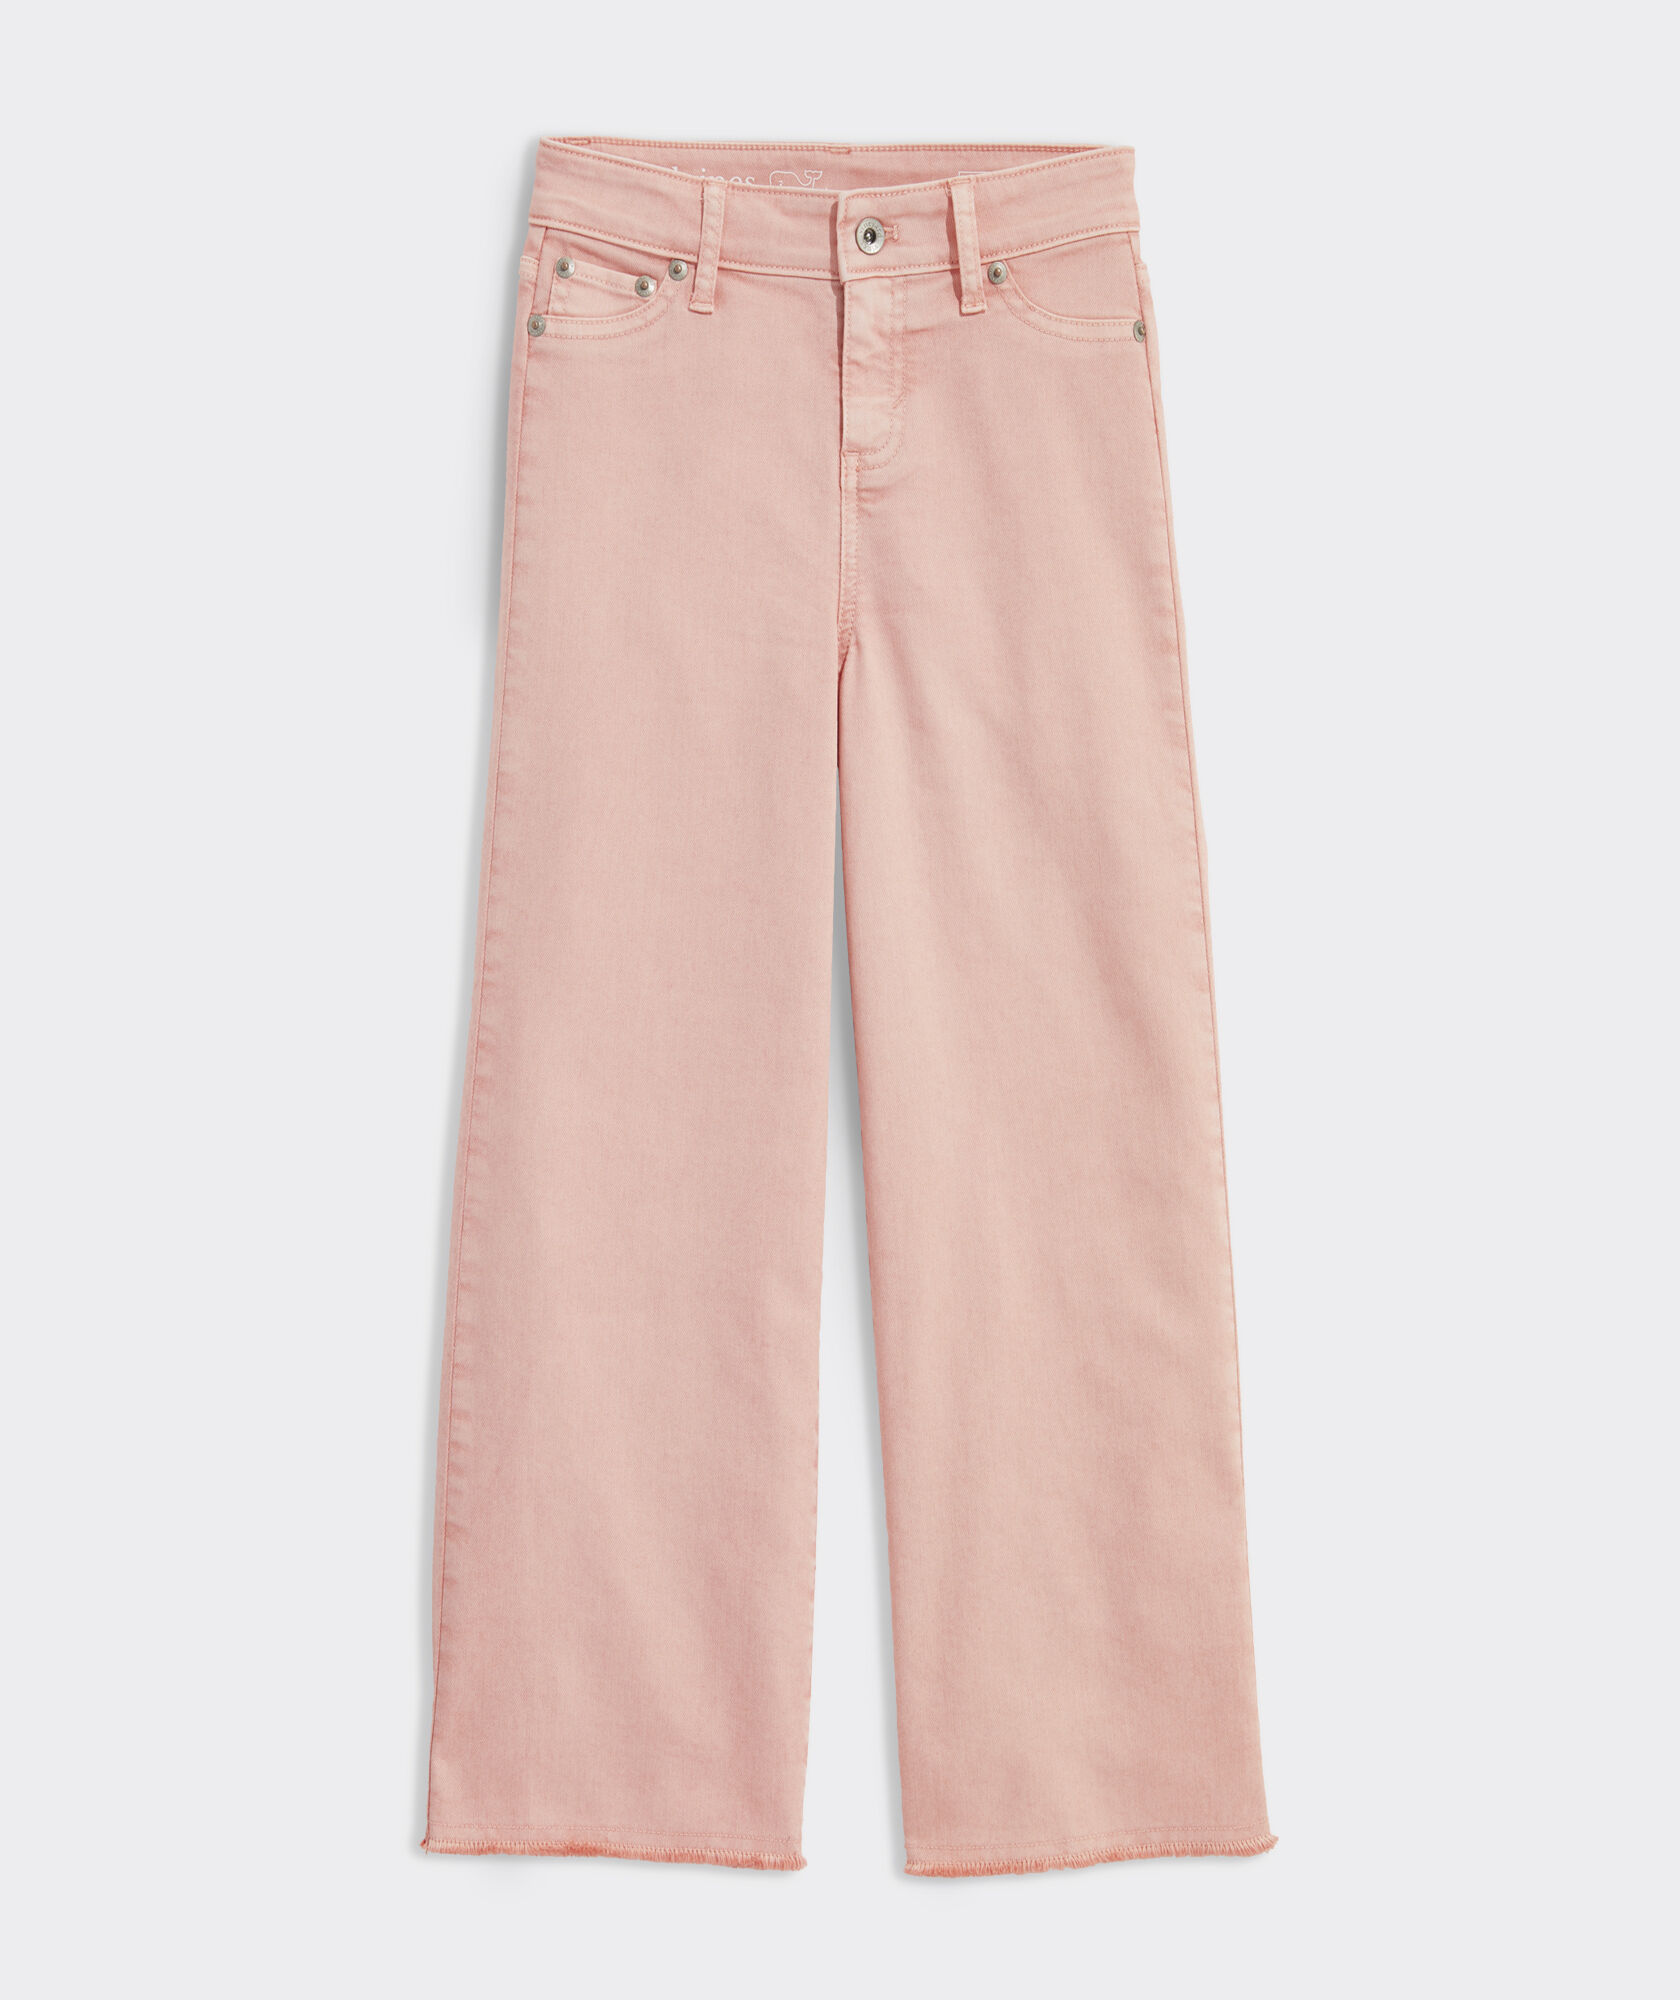 Vineyard Vines Pink Breaker Pants 30x32 | Clothes design, Pants, Fashion